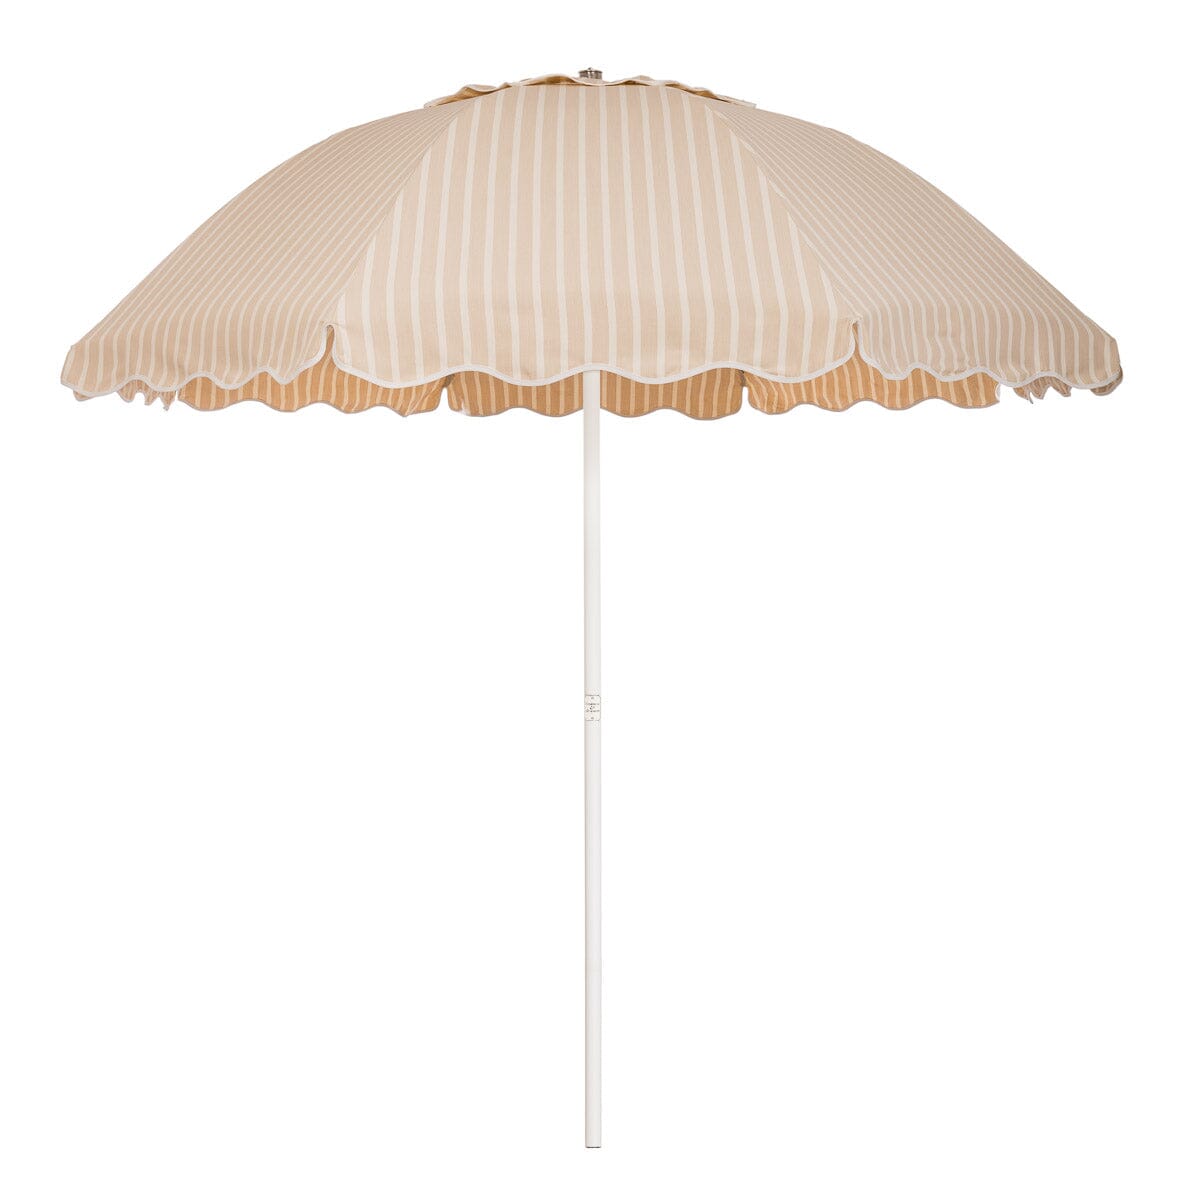 The Patio Umbrella - Monaco Natural Stripe Patio Umbrella Business & Pleasure Co Aus 